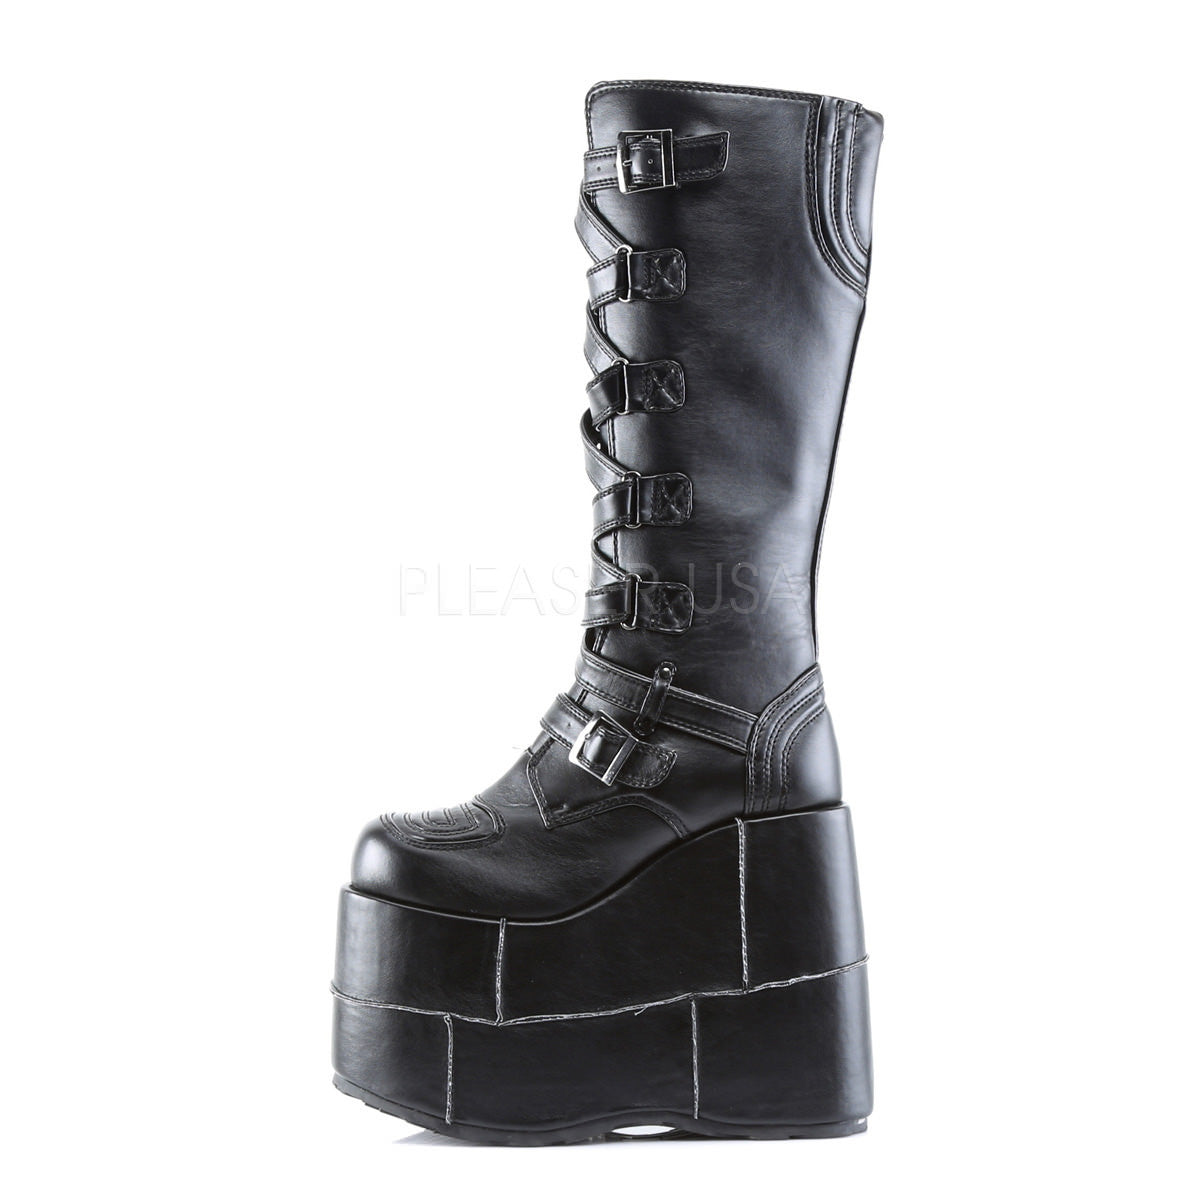 DEMONIA STACK-308 Men's Black Pu Vegan Boots - Shoecup.com - 2